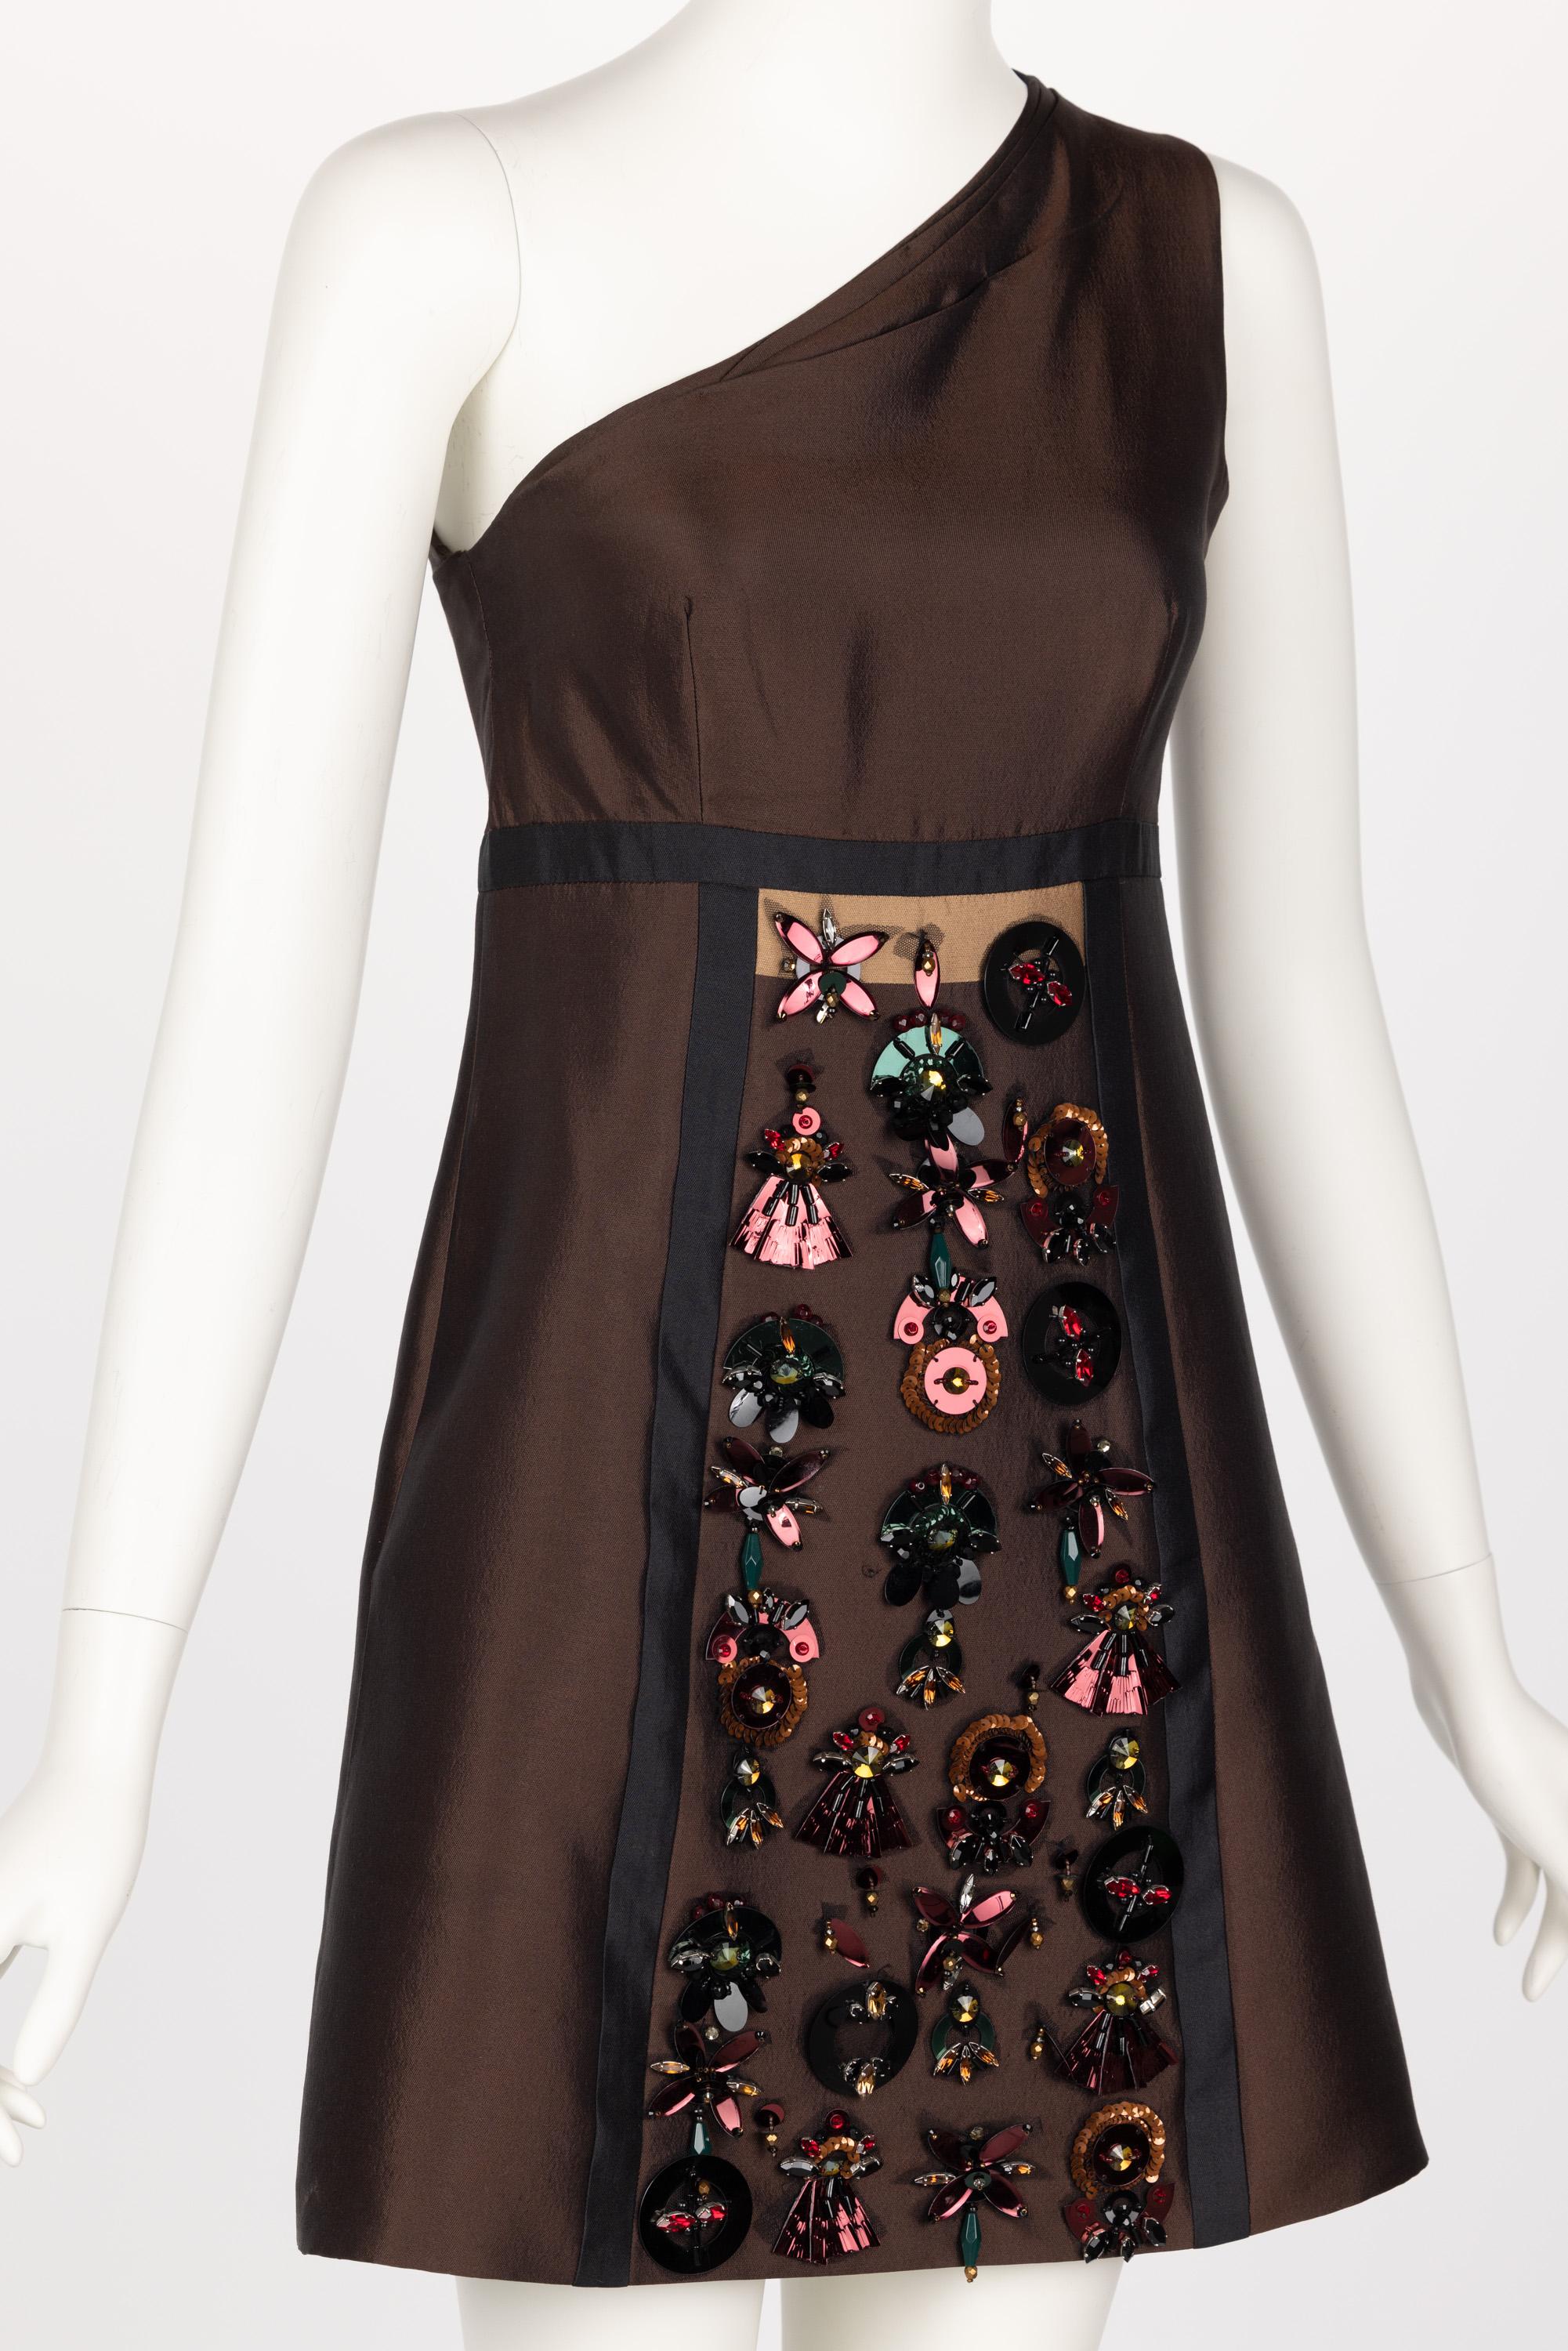 Prada S/S 2005 Majestic Silk Embelished Mini Dress In Good Condition For Sale In Boca Raton, FL